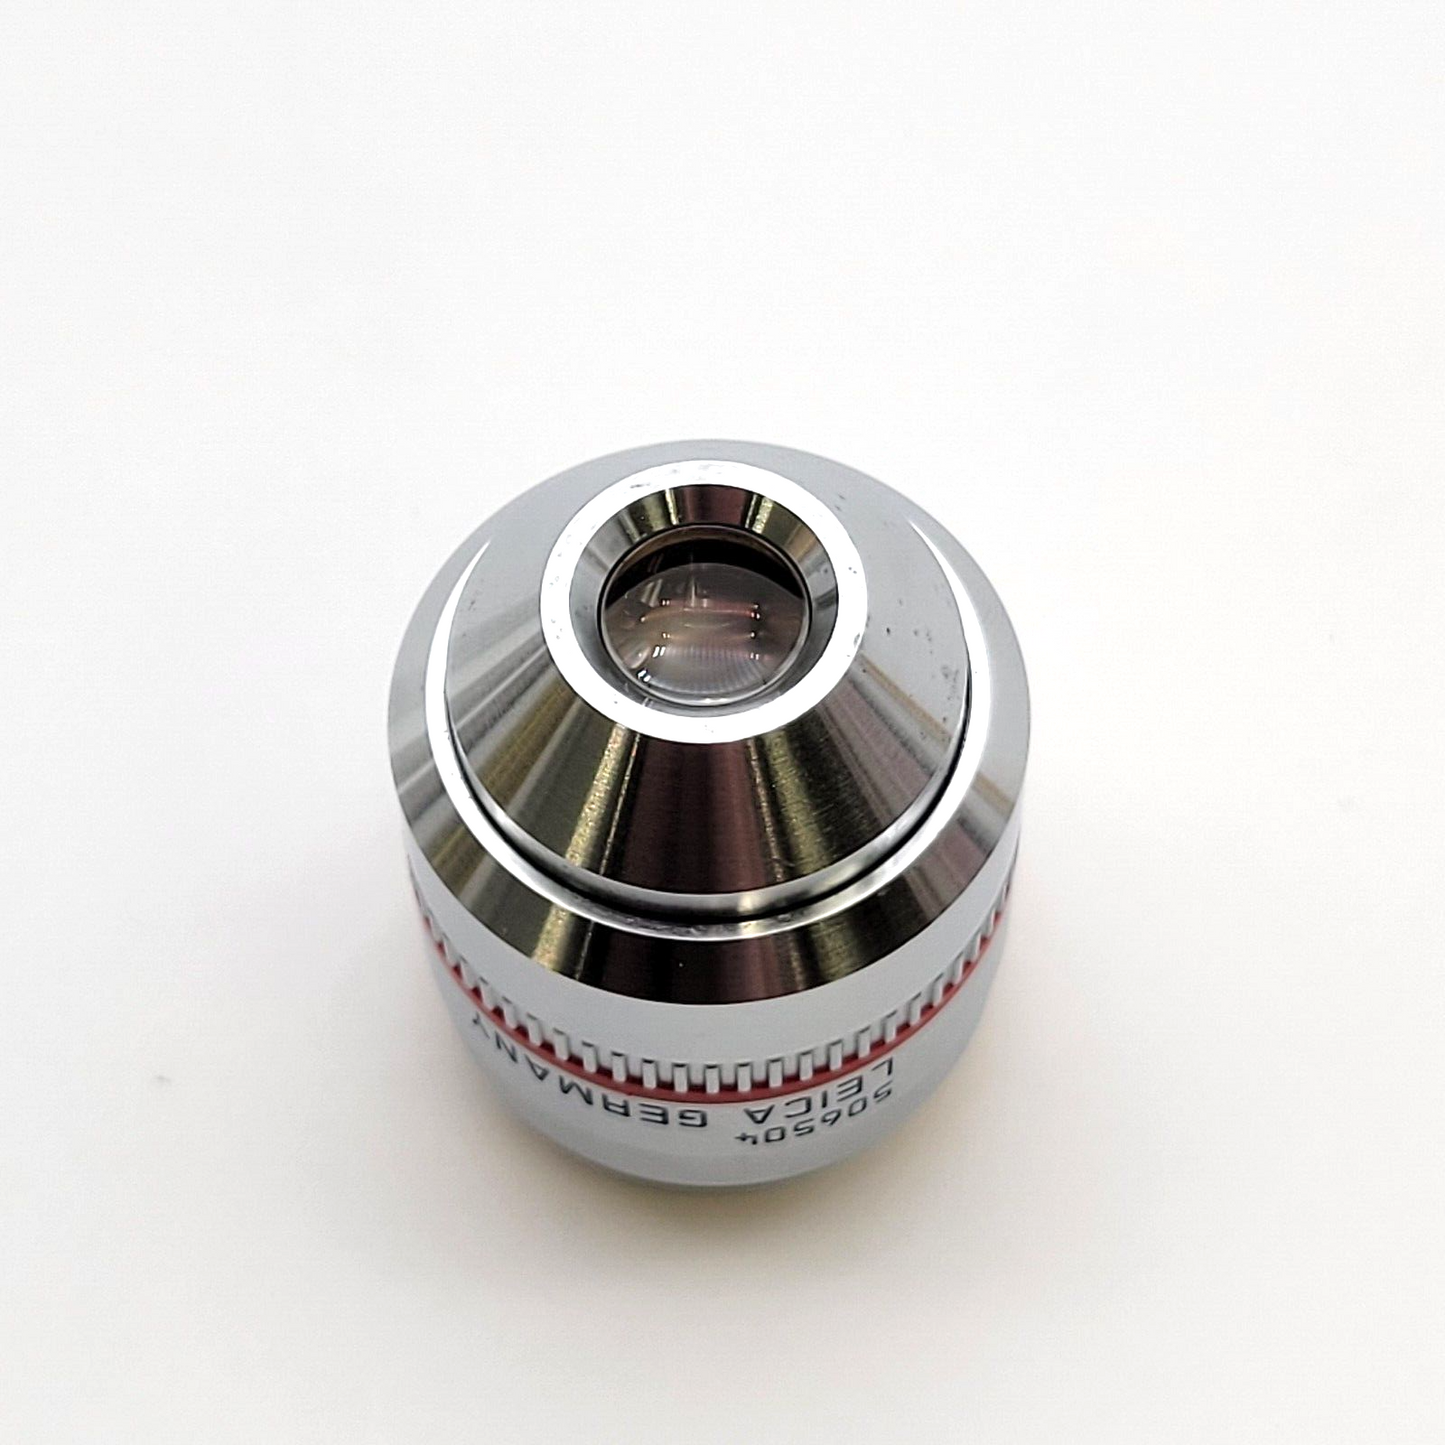 Leica Microscope Objective HC PL Fluotar 5x ∞/-/D  506504 - microscopemarketplace